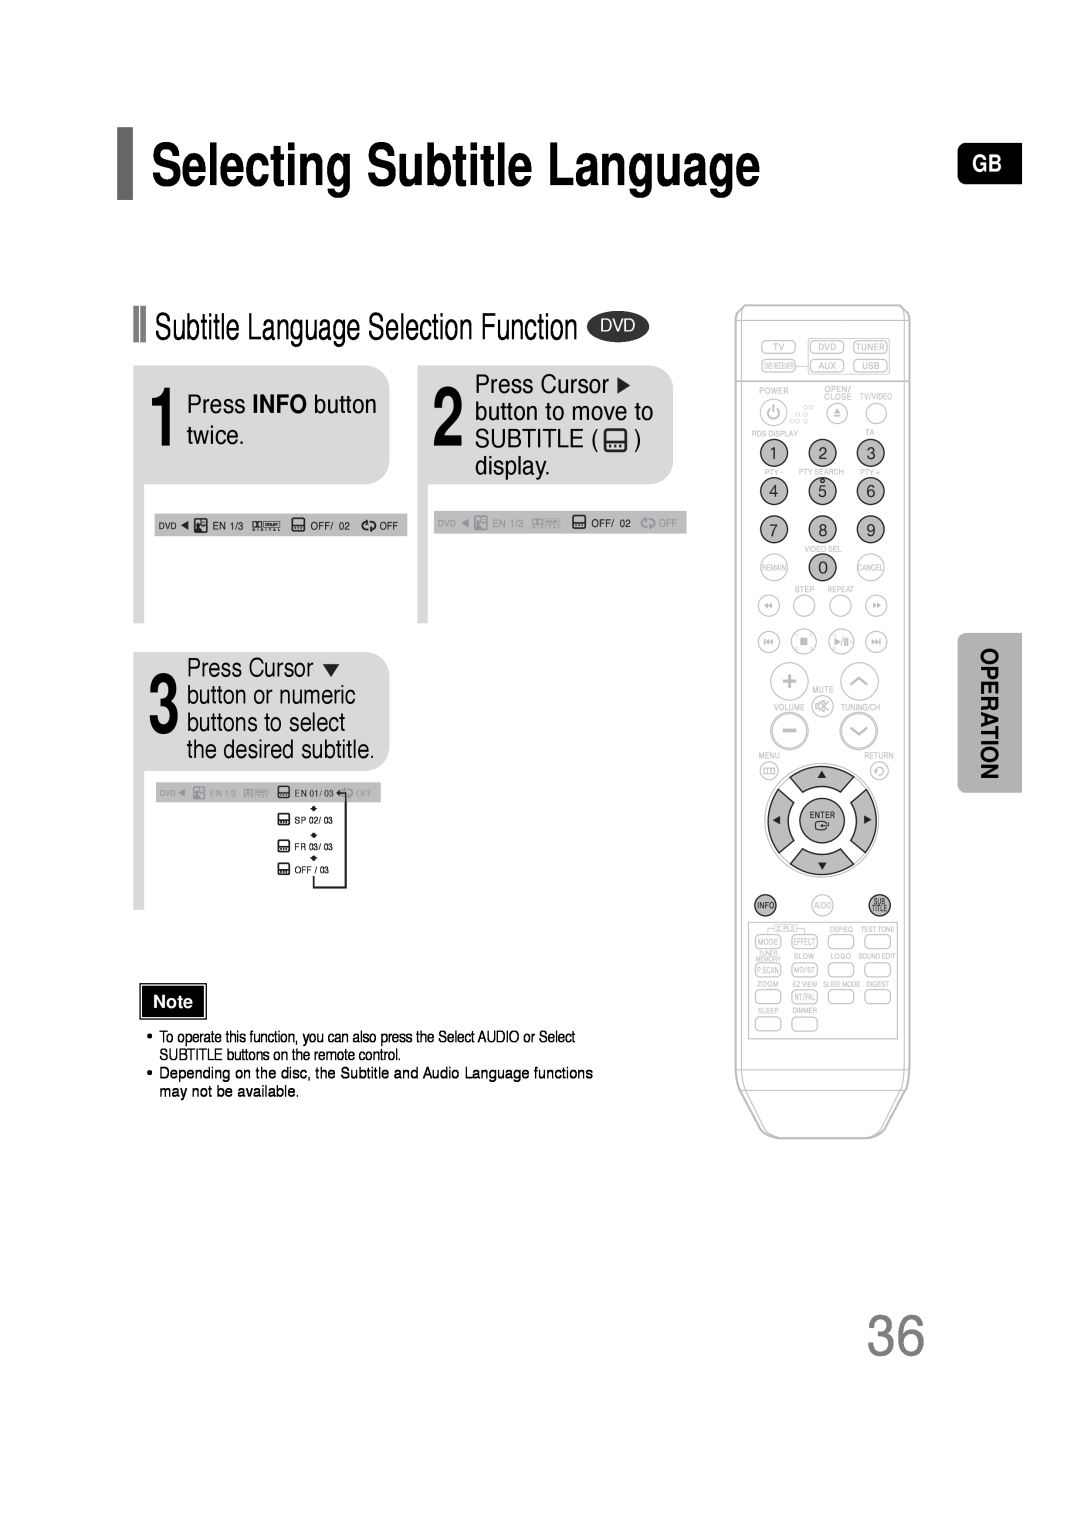 Samsung HT-TQ22 Selecting Subtitle Language, Subtitle Language Selection Function DVD, twice.SUBTITLE display, Operation 